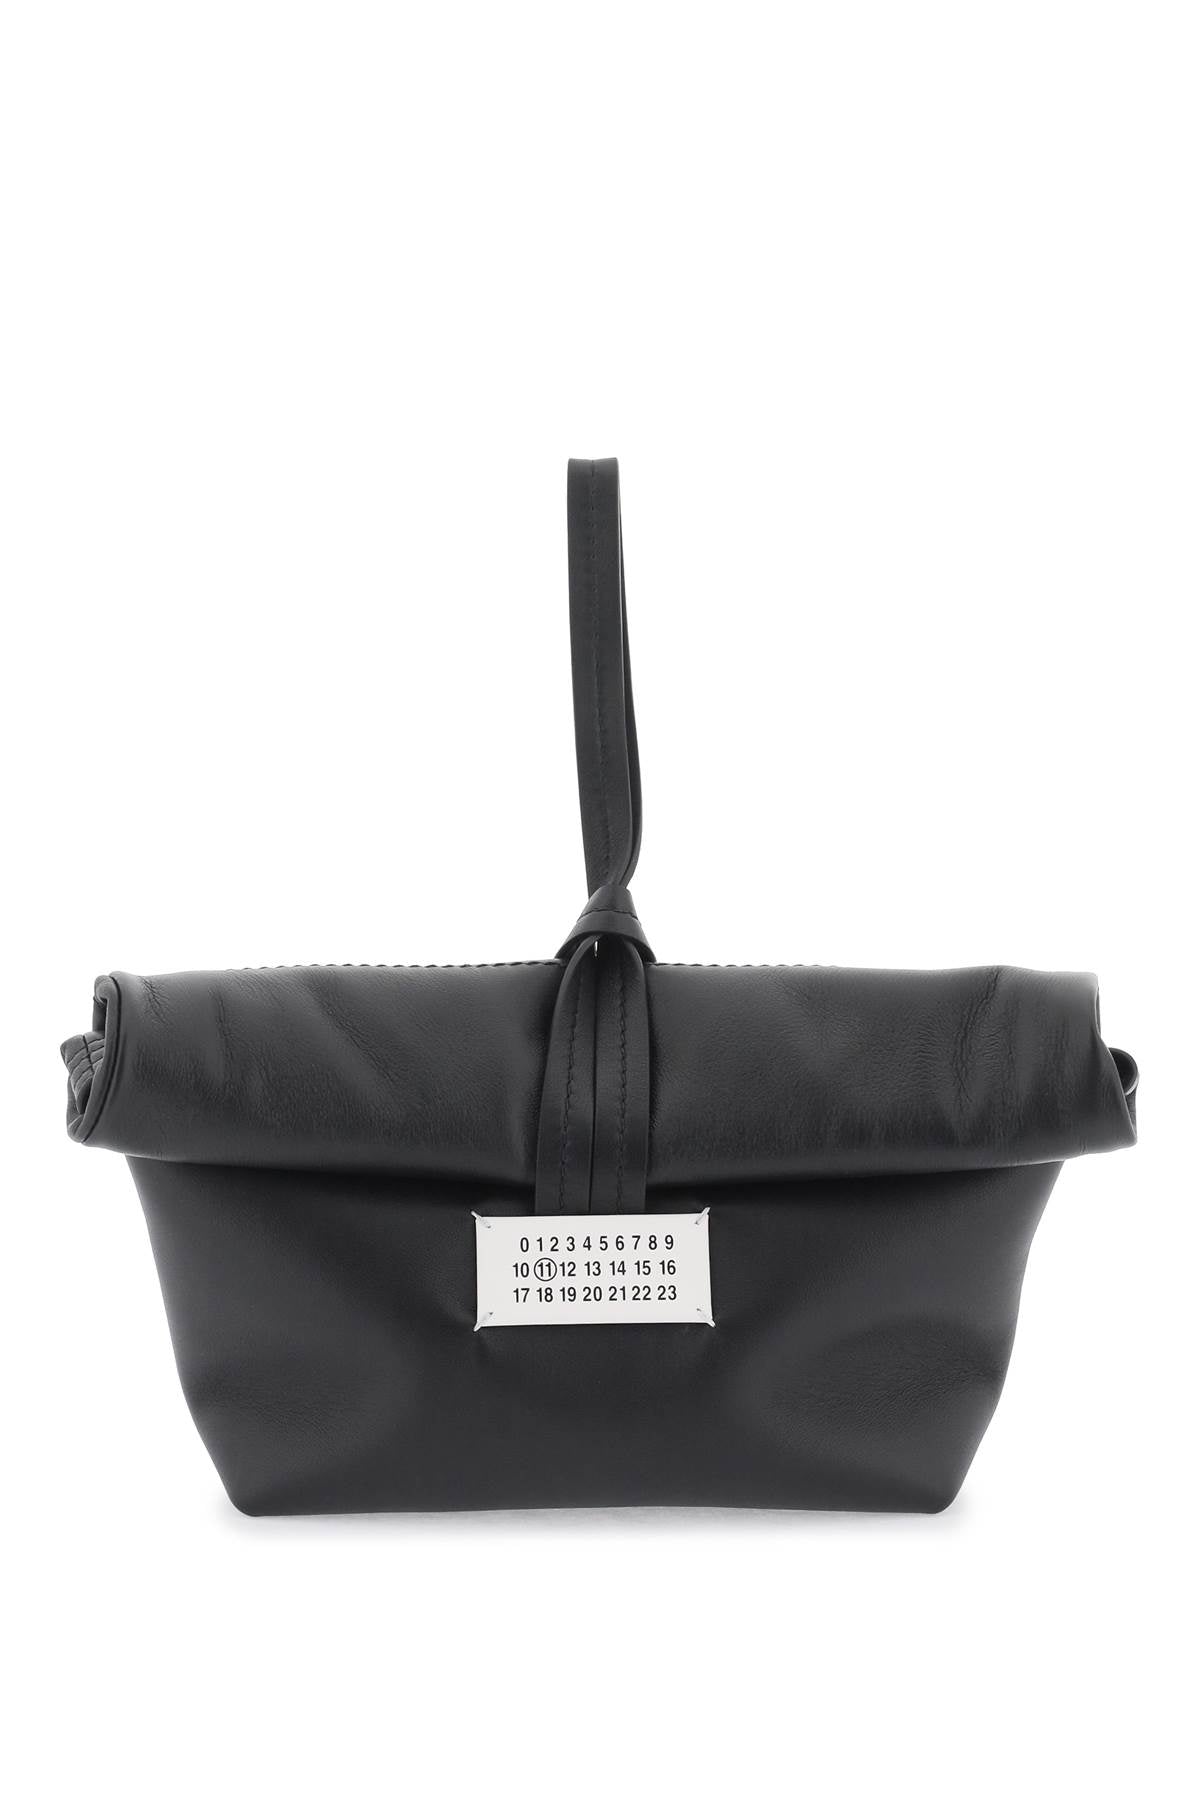 Maison Margiela Leather Clutch Bag In Black